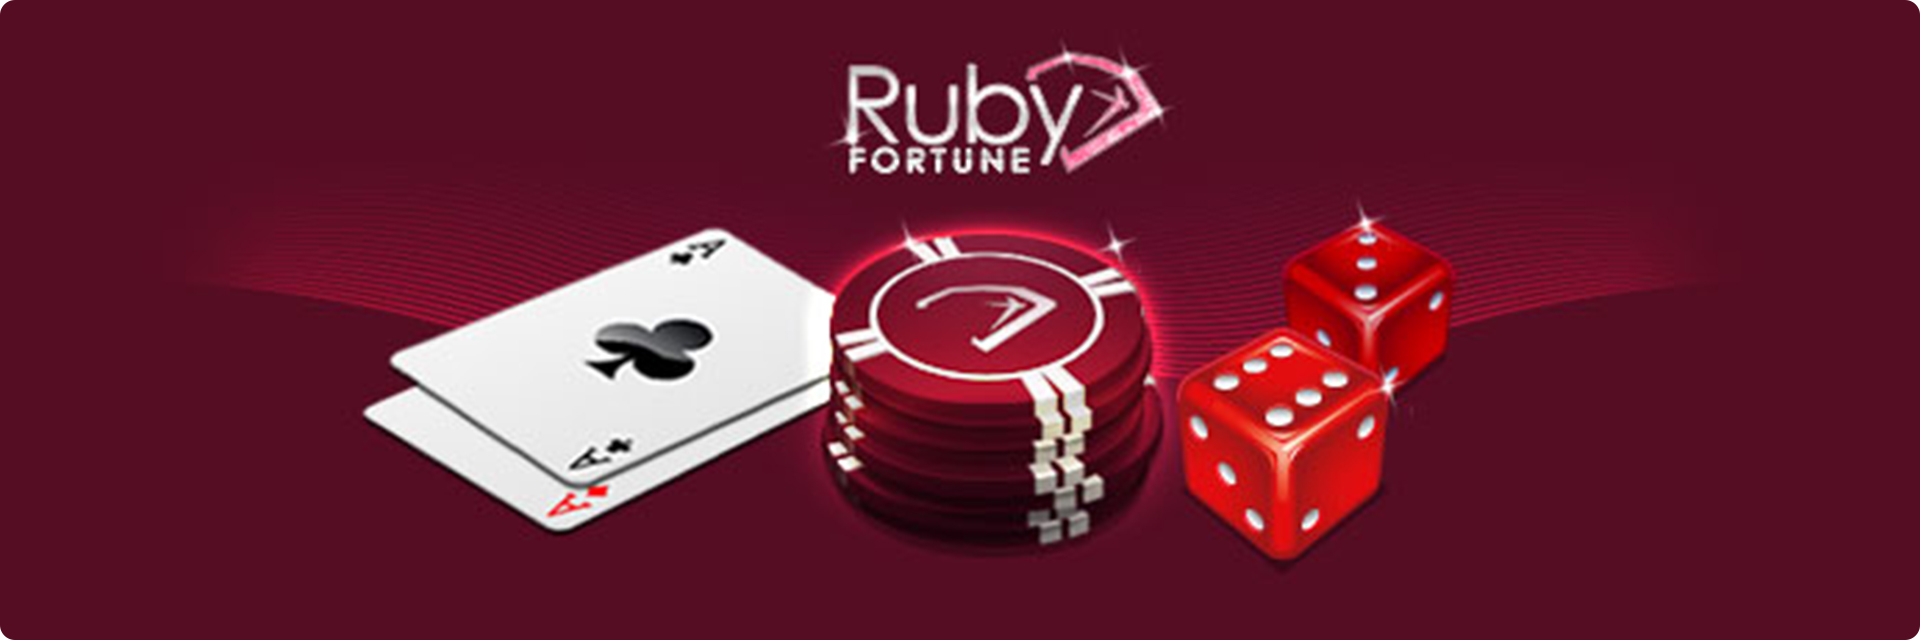 Ruby Fortune casino.